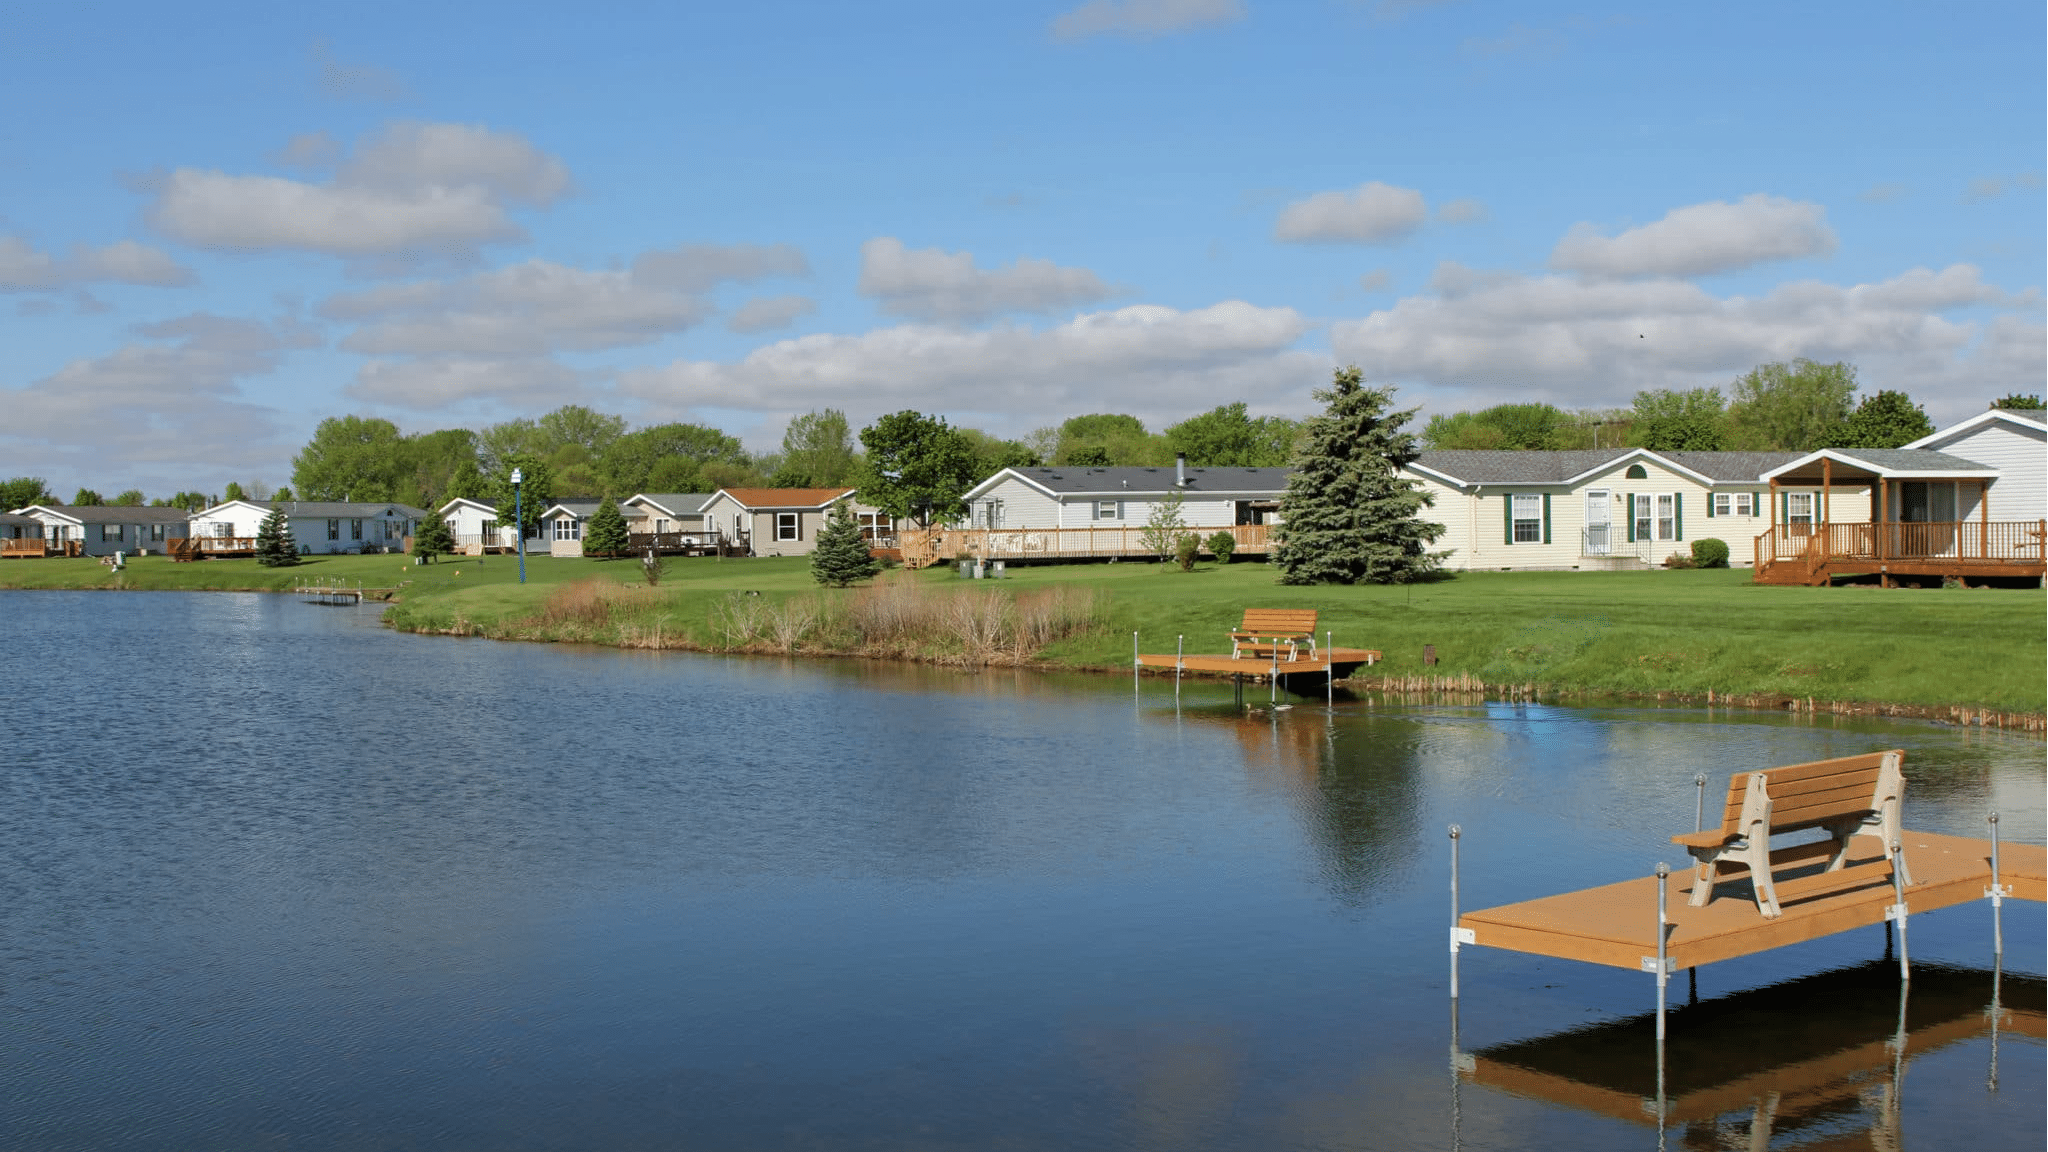 Edgewood Pond Our Community